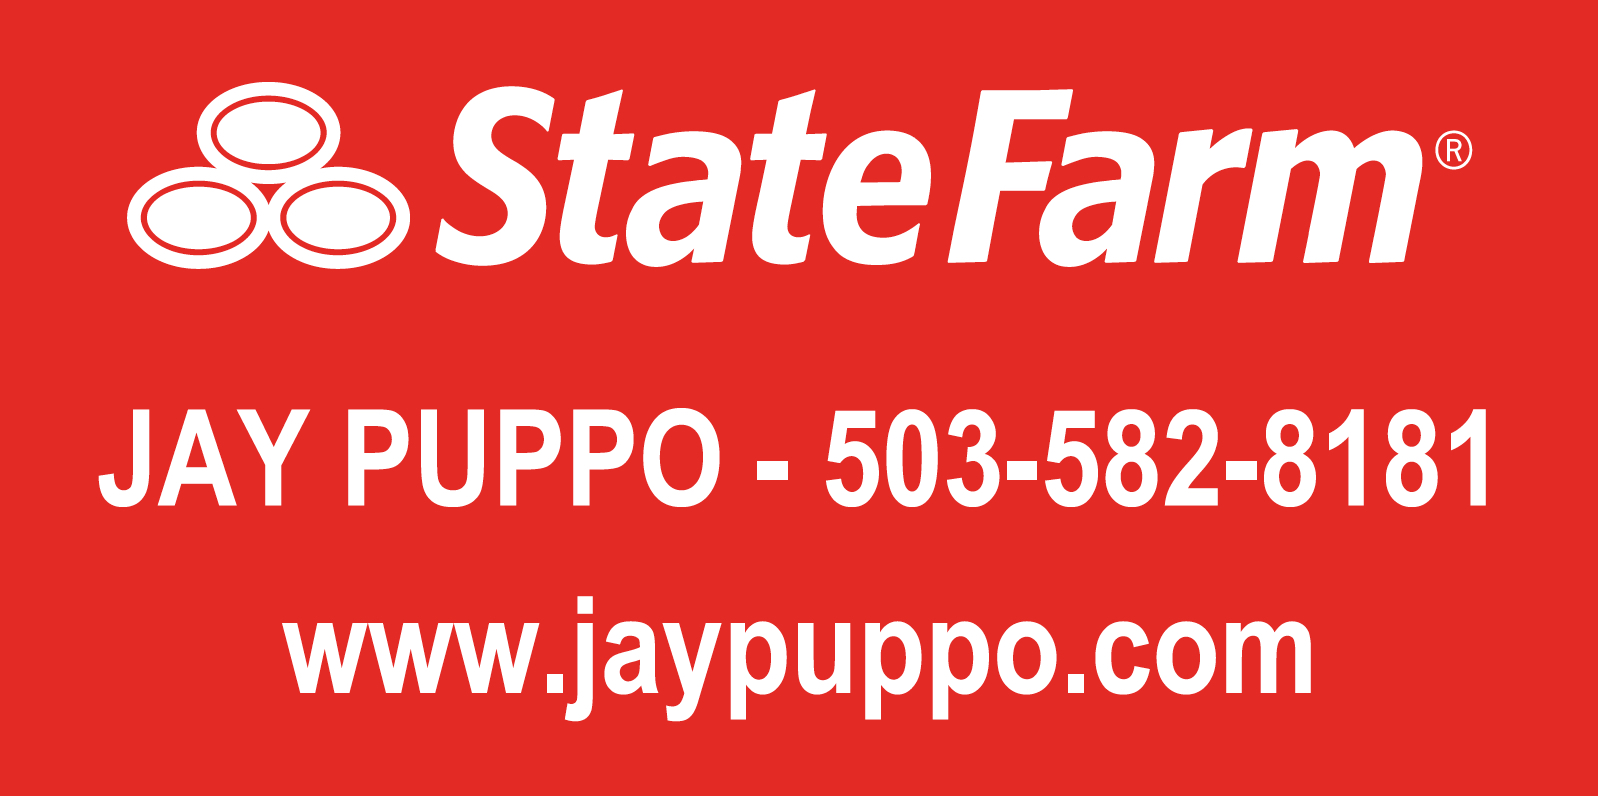 Jay Puppo SF w web & phone